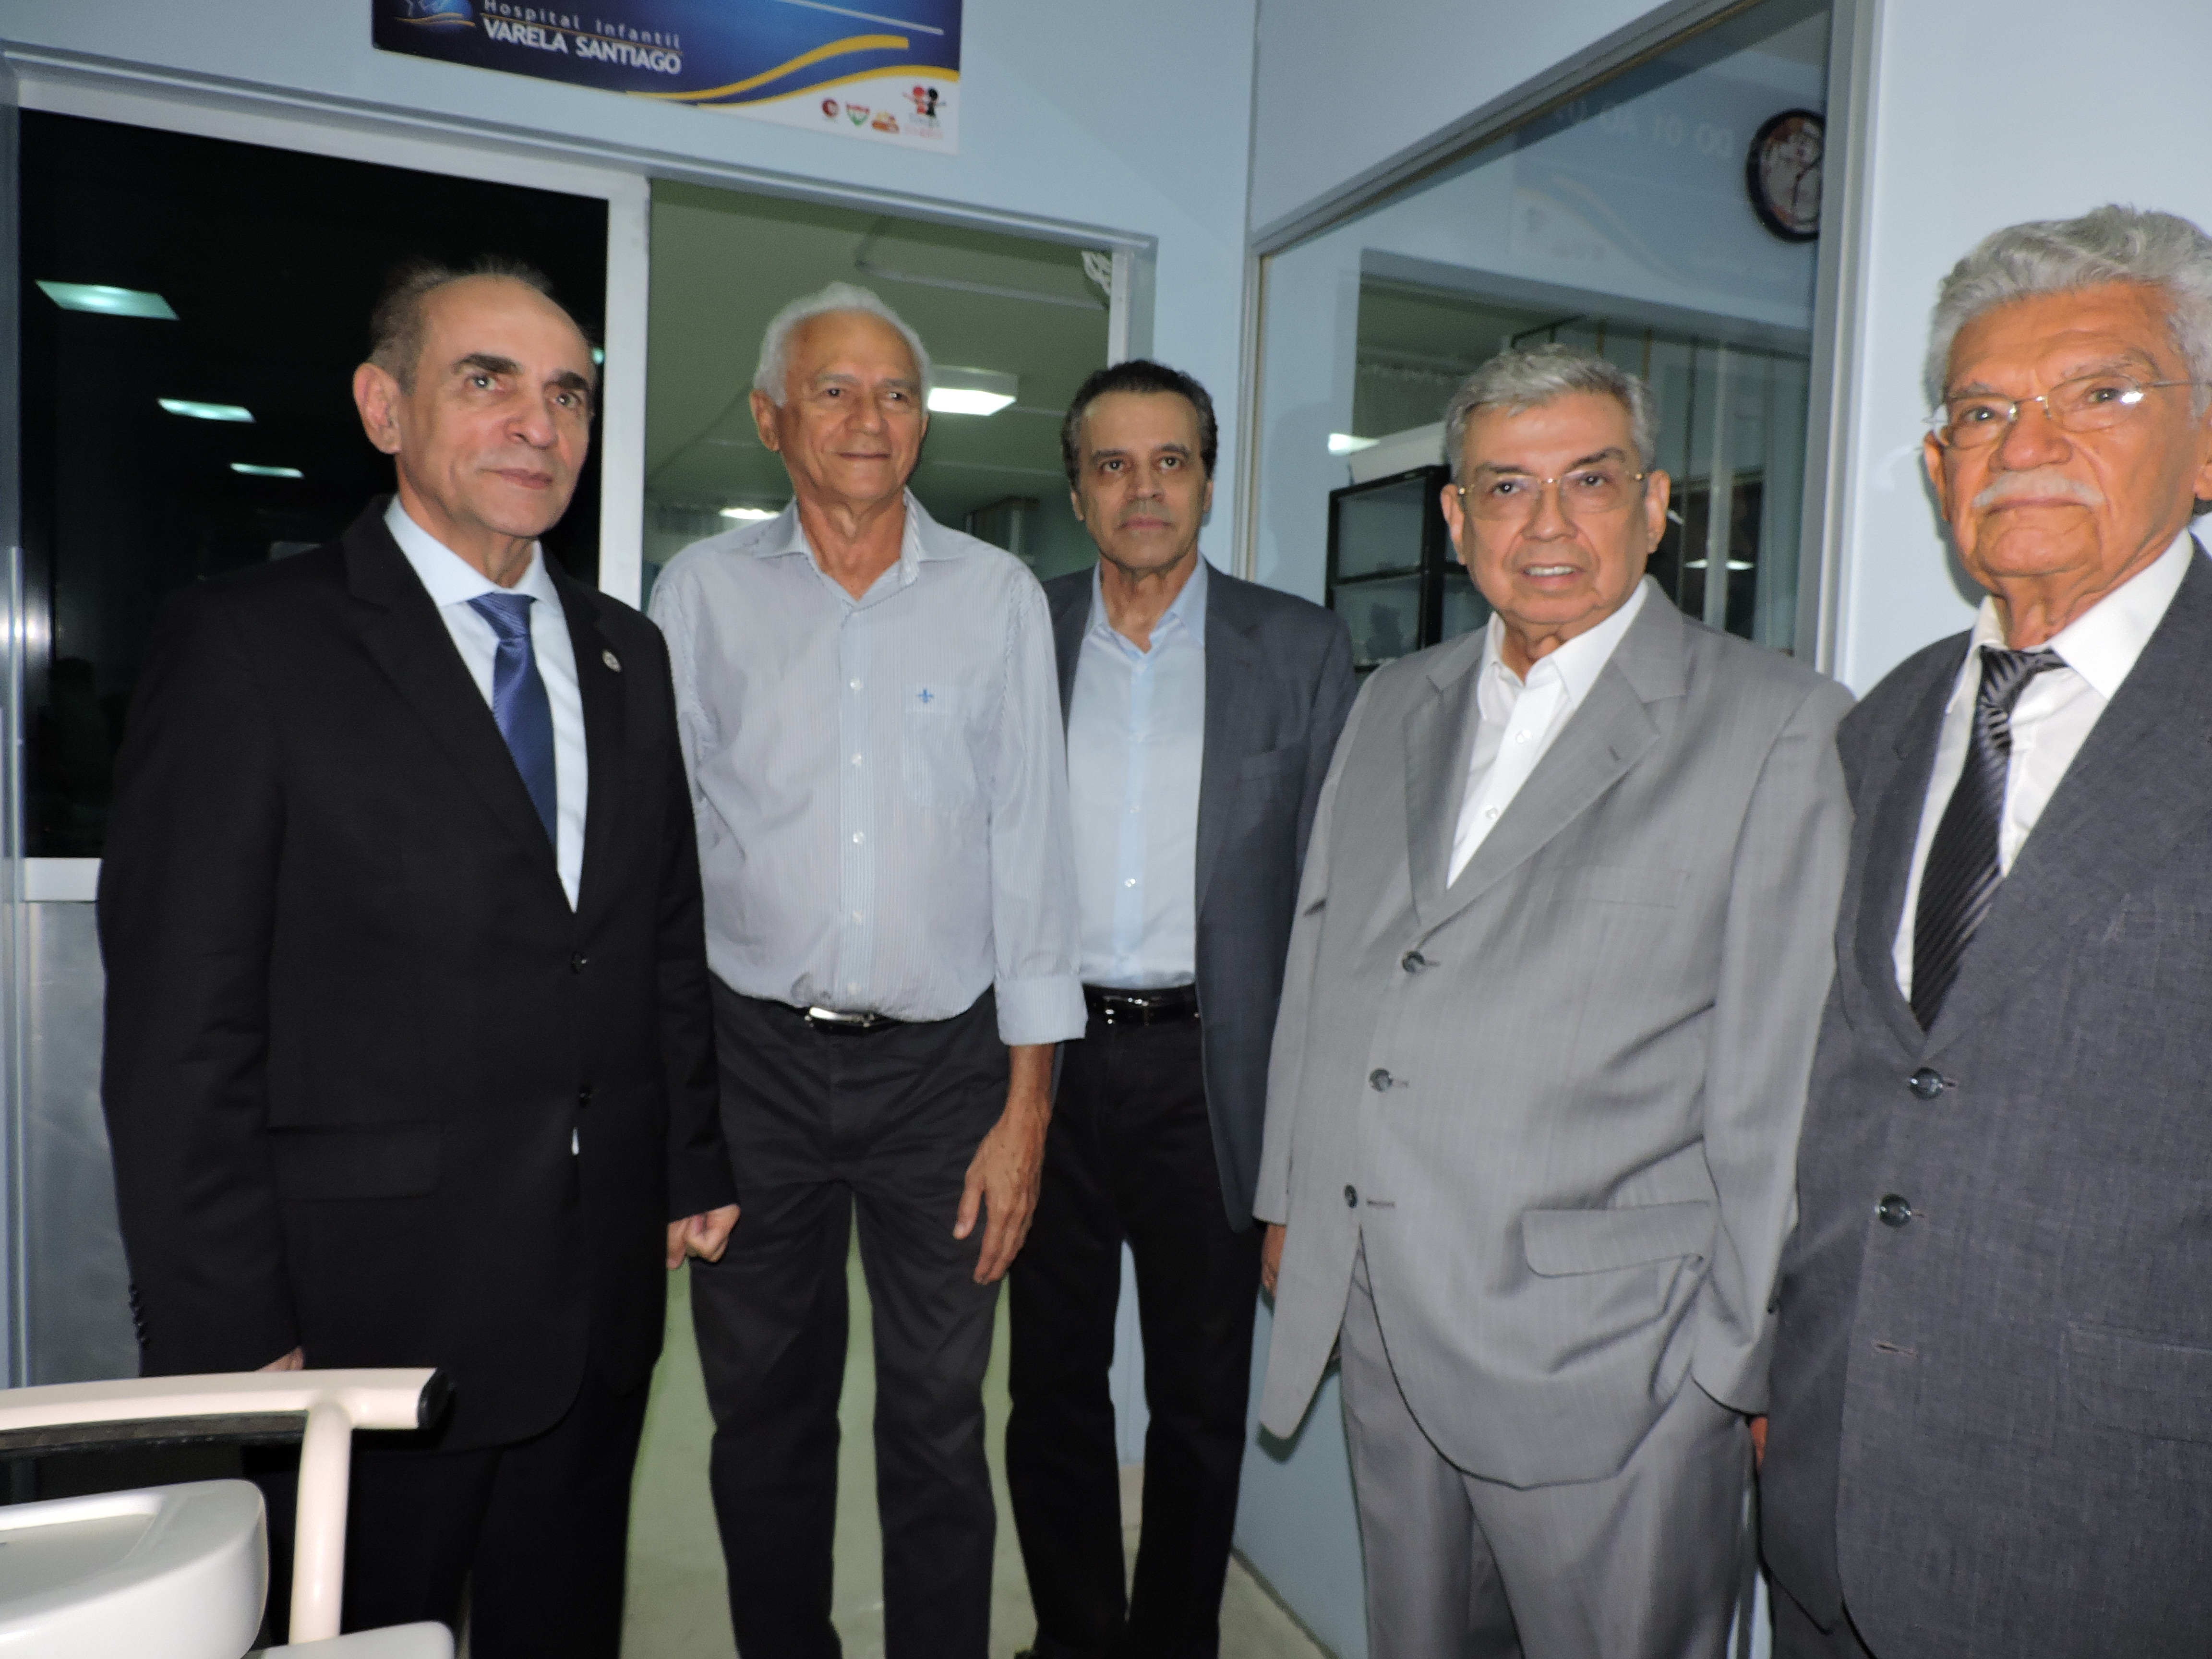 Ministro de saúde visita Varela Santiago